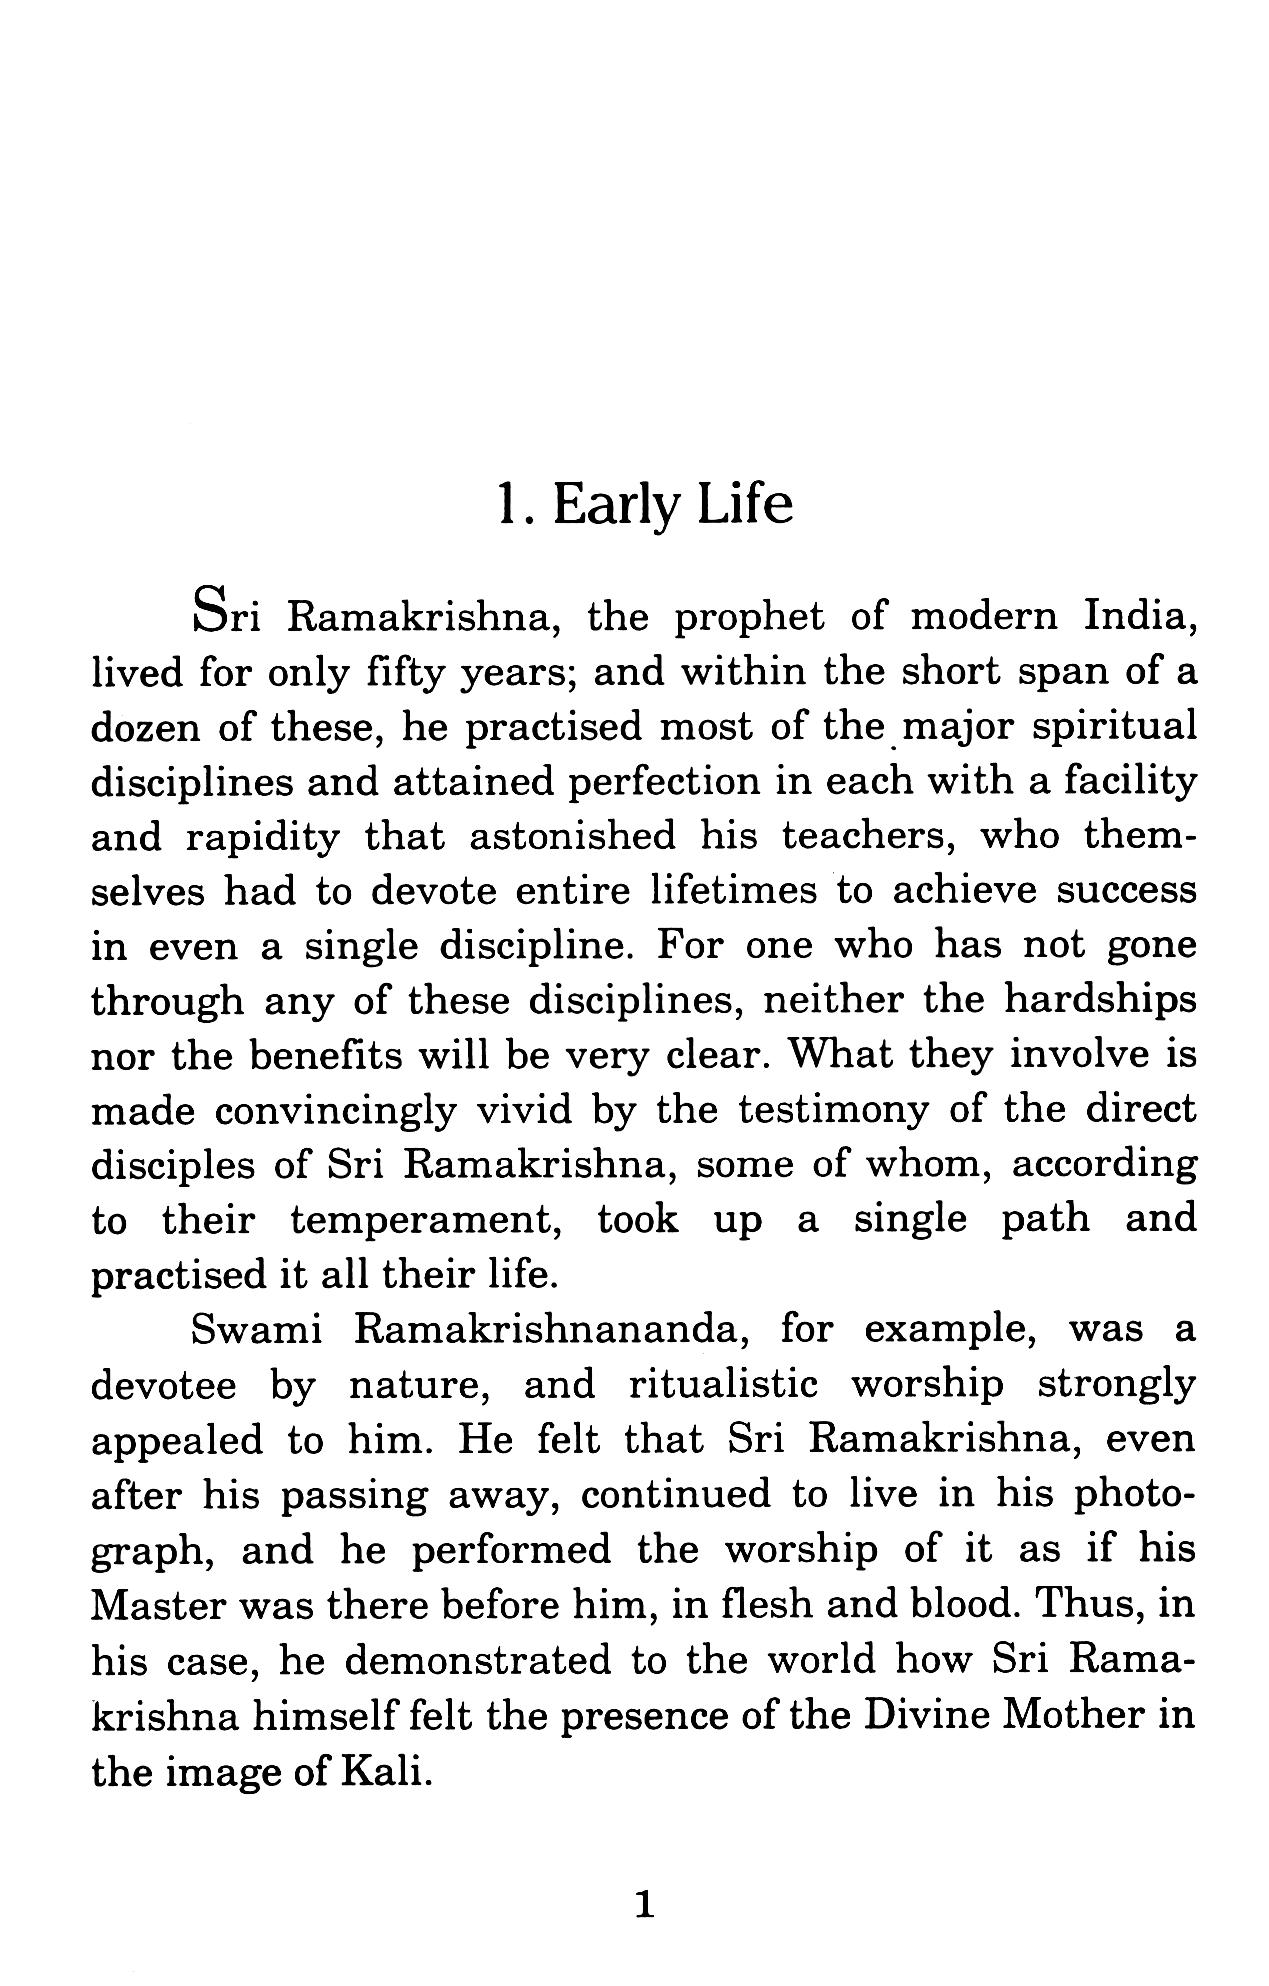 Swami Turiyananda - Life and Teachings